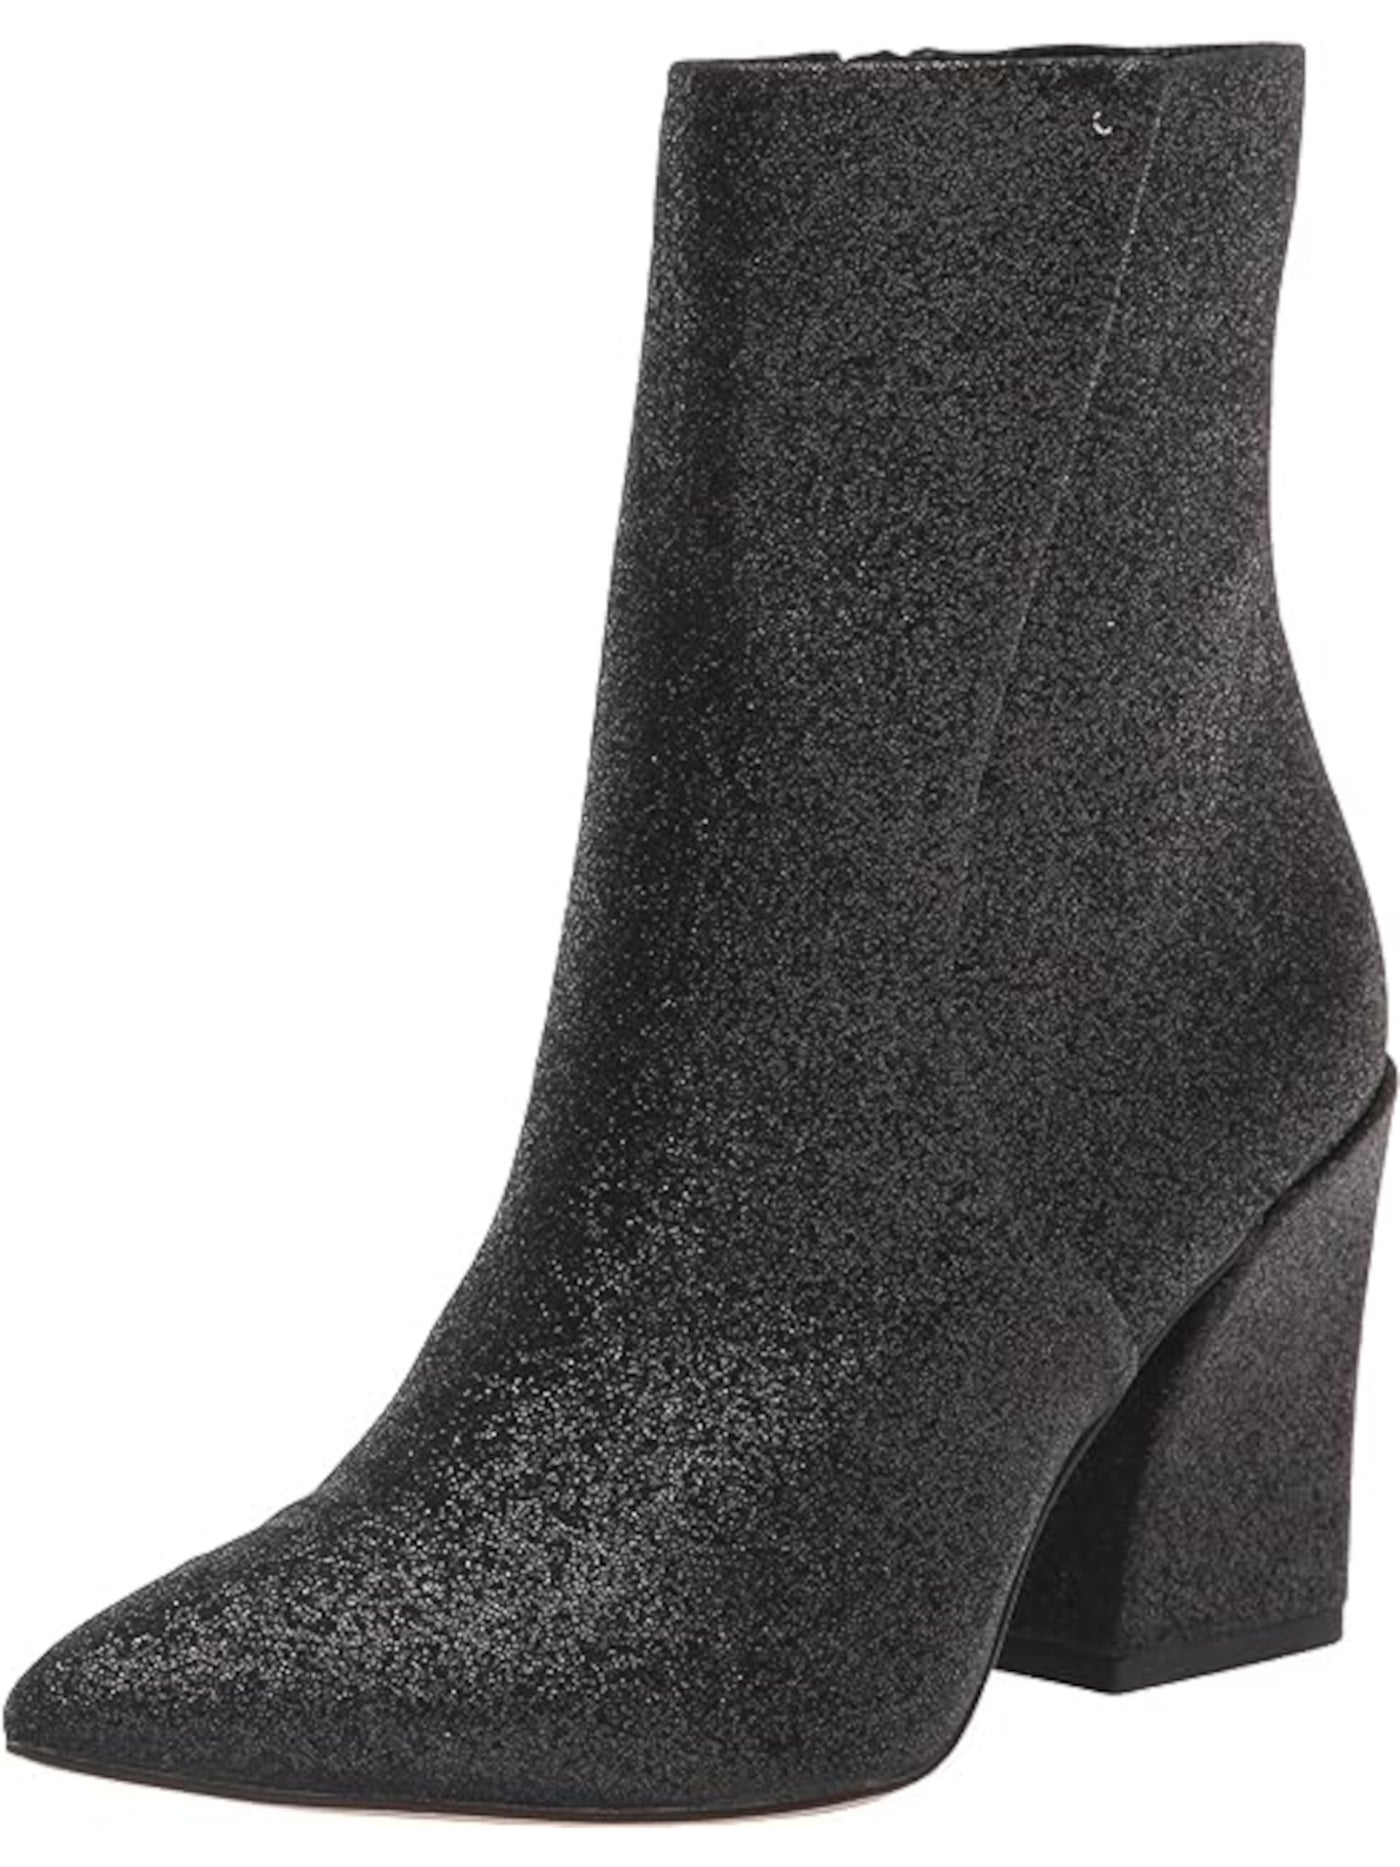 FRANCO SARTO Womens Black Padded Glitter Vesi Pointed Toe Block Heel Zip-Up Dress Booties 10 M